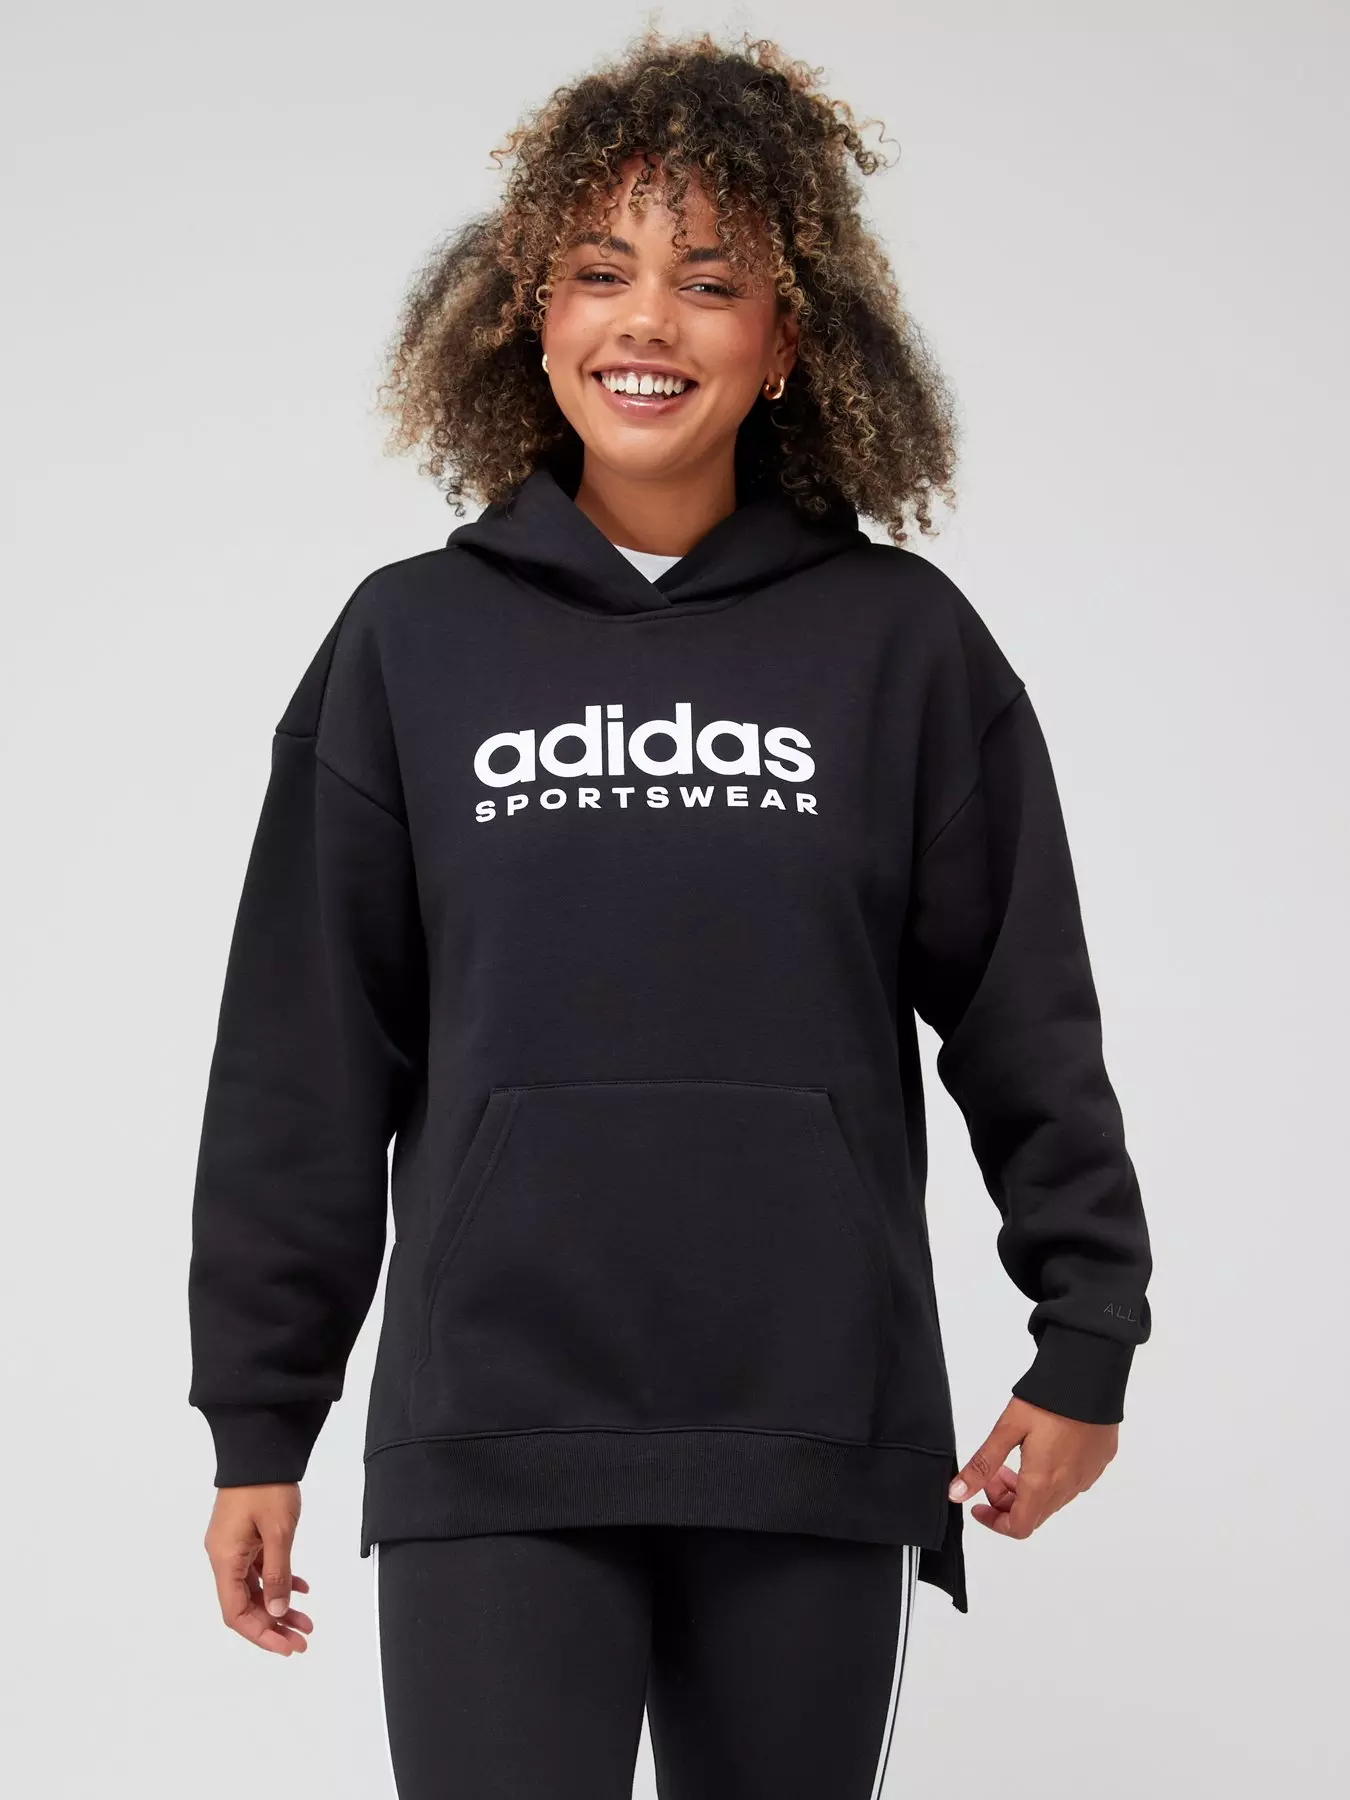 Ireland | & | Sportswear Very Women sweatshirts Adidas | Hoodies |